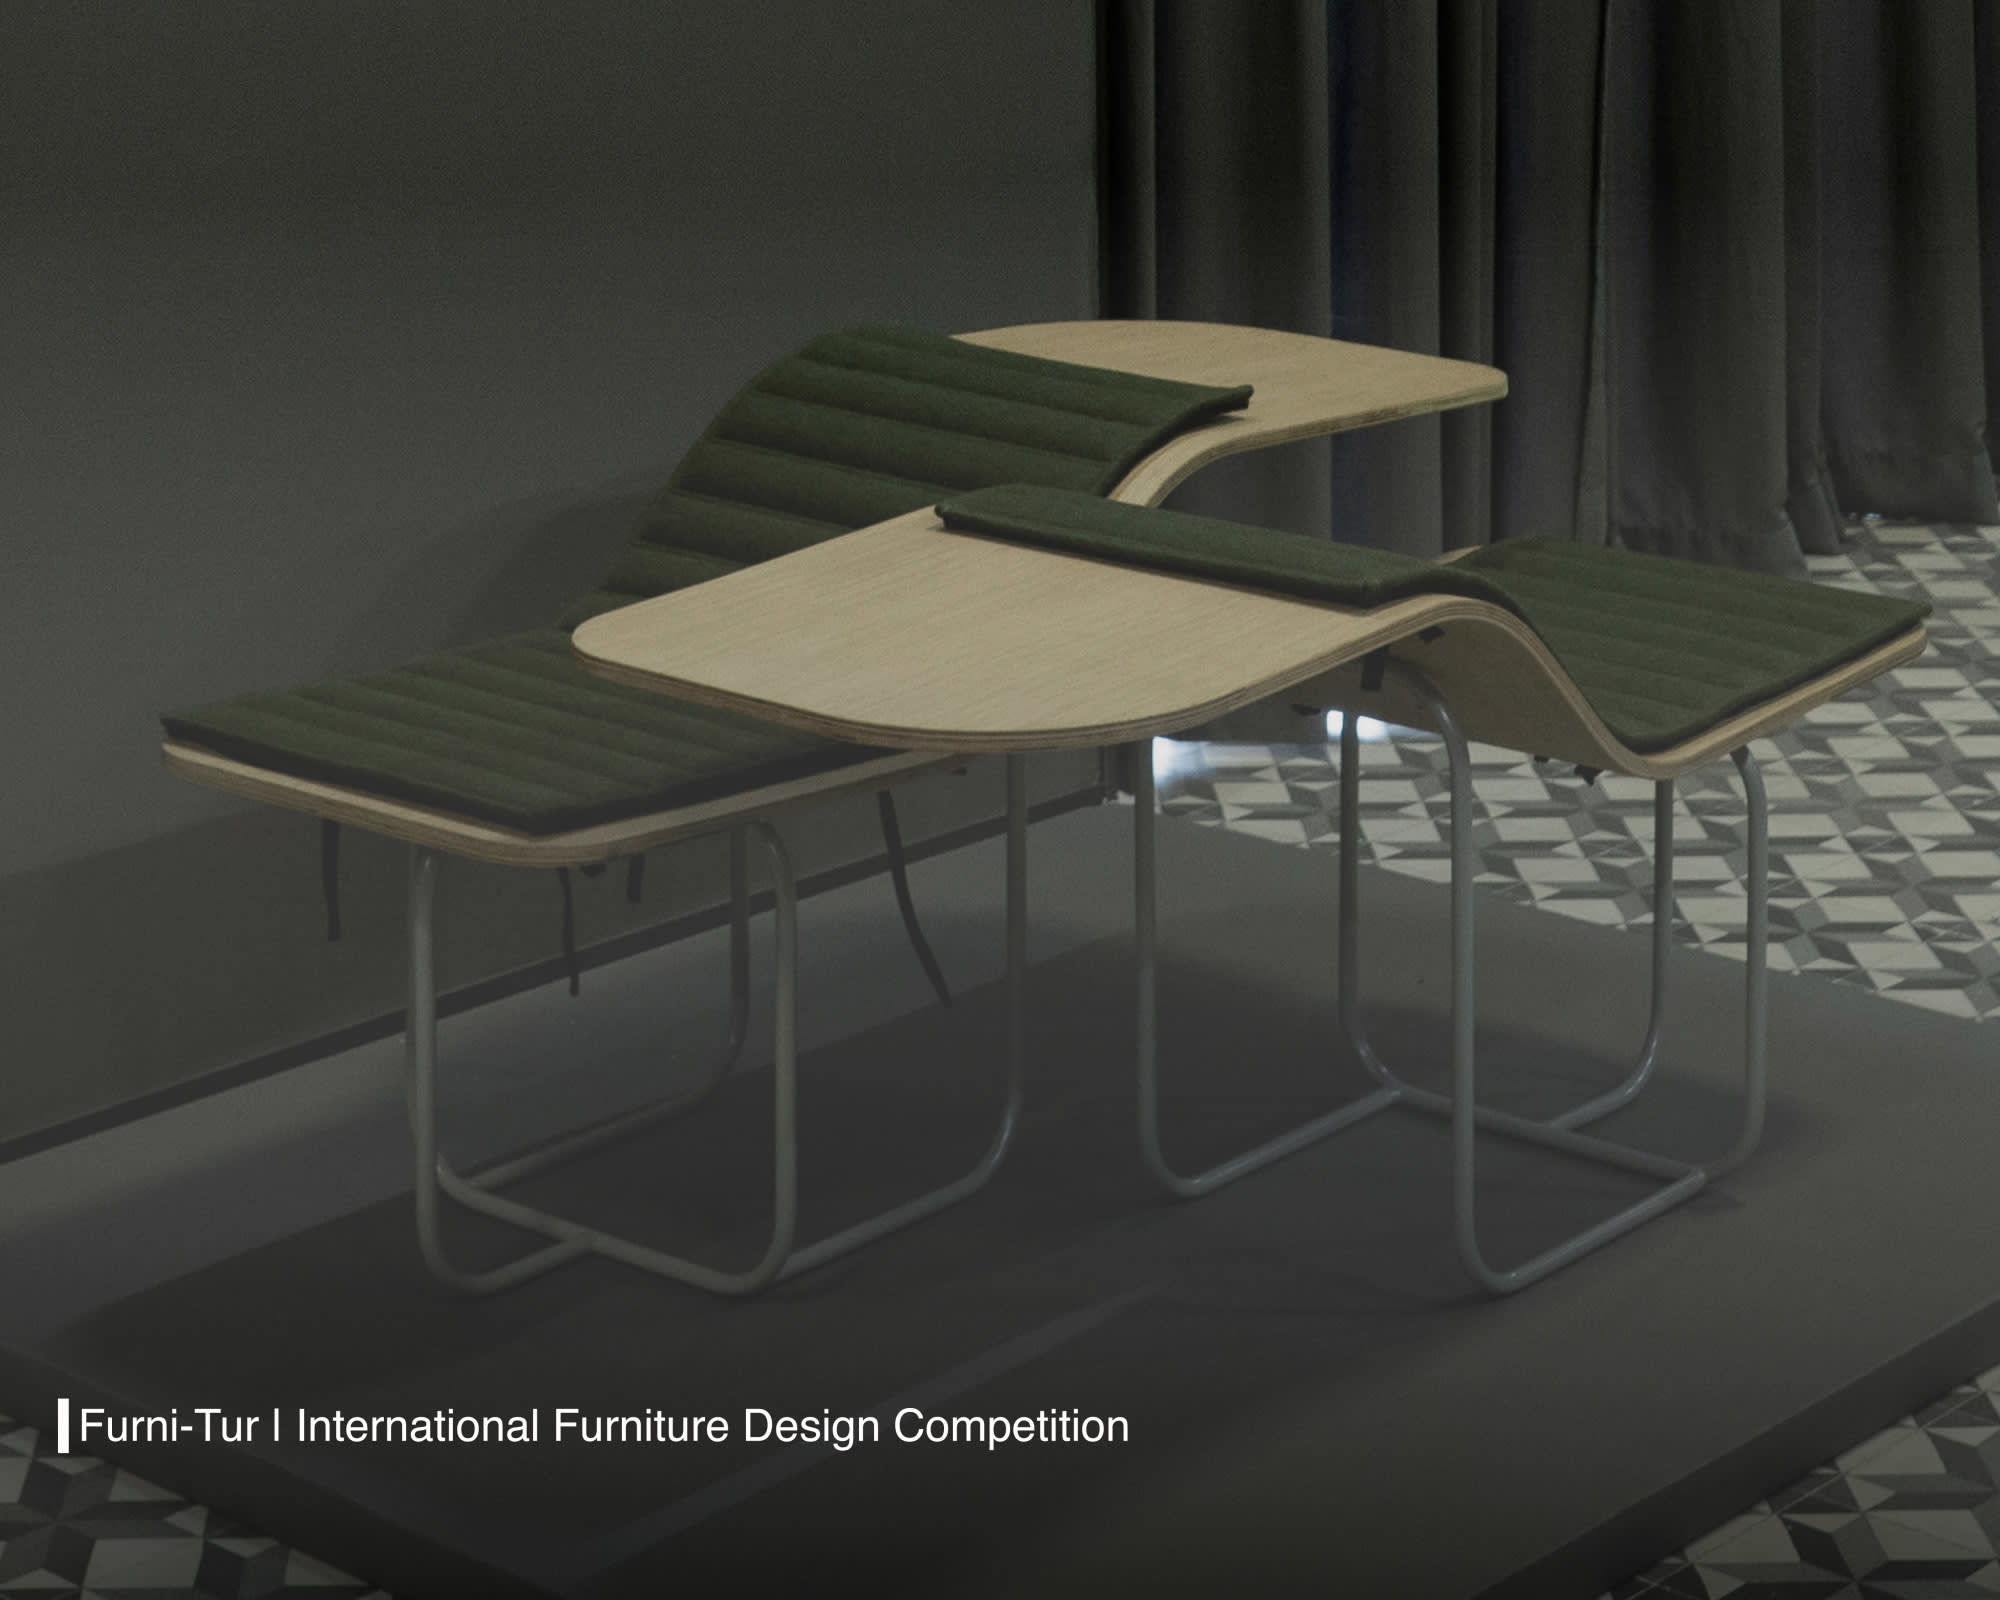 iF DESIGN MARATHON 2022: Turkey Design Council - International Furniture Design Competition: Furni-Tur